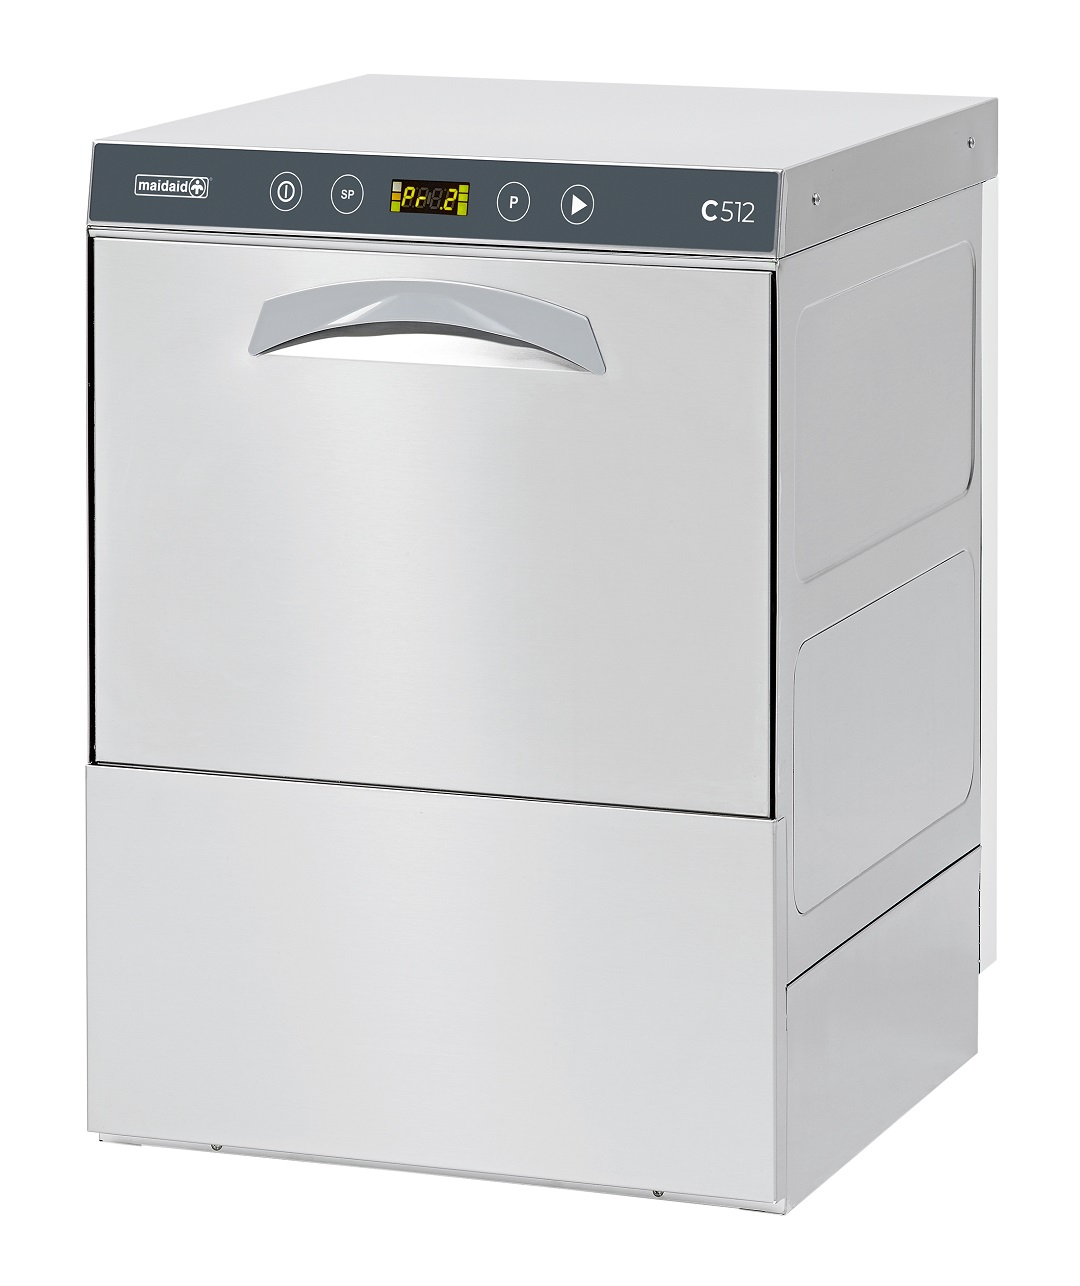 Maidaid C512 Undercounter Dishwasher